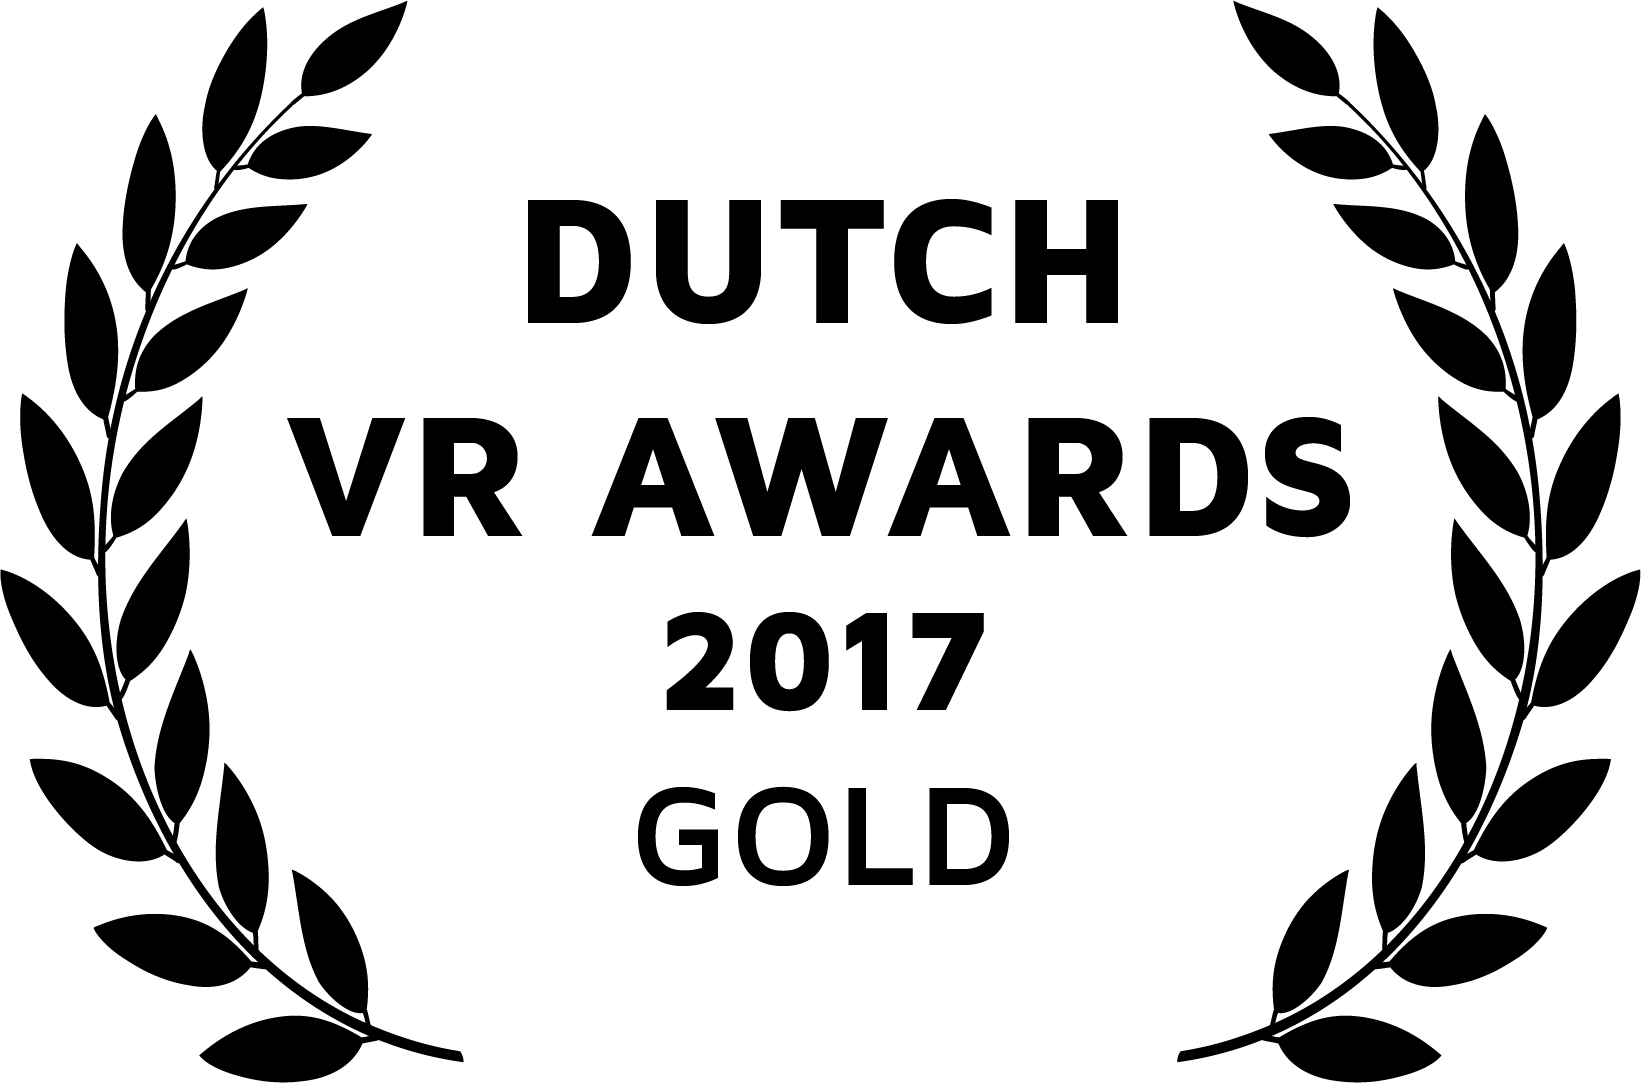 Dutch VR Awards Gold logo